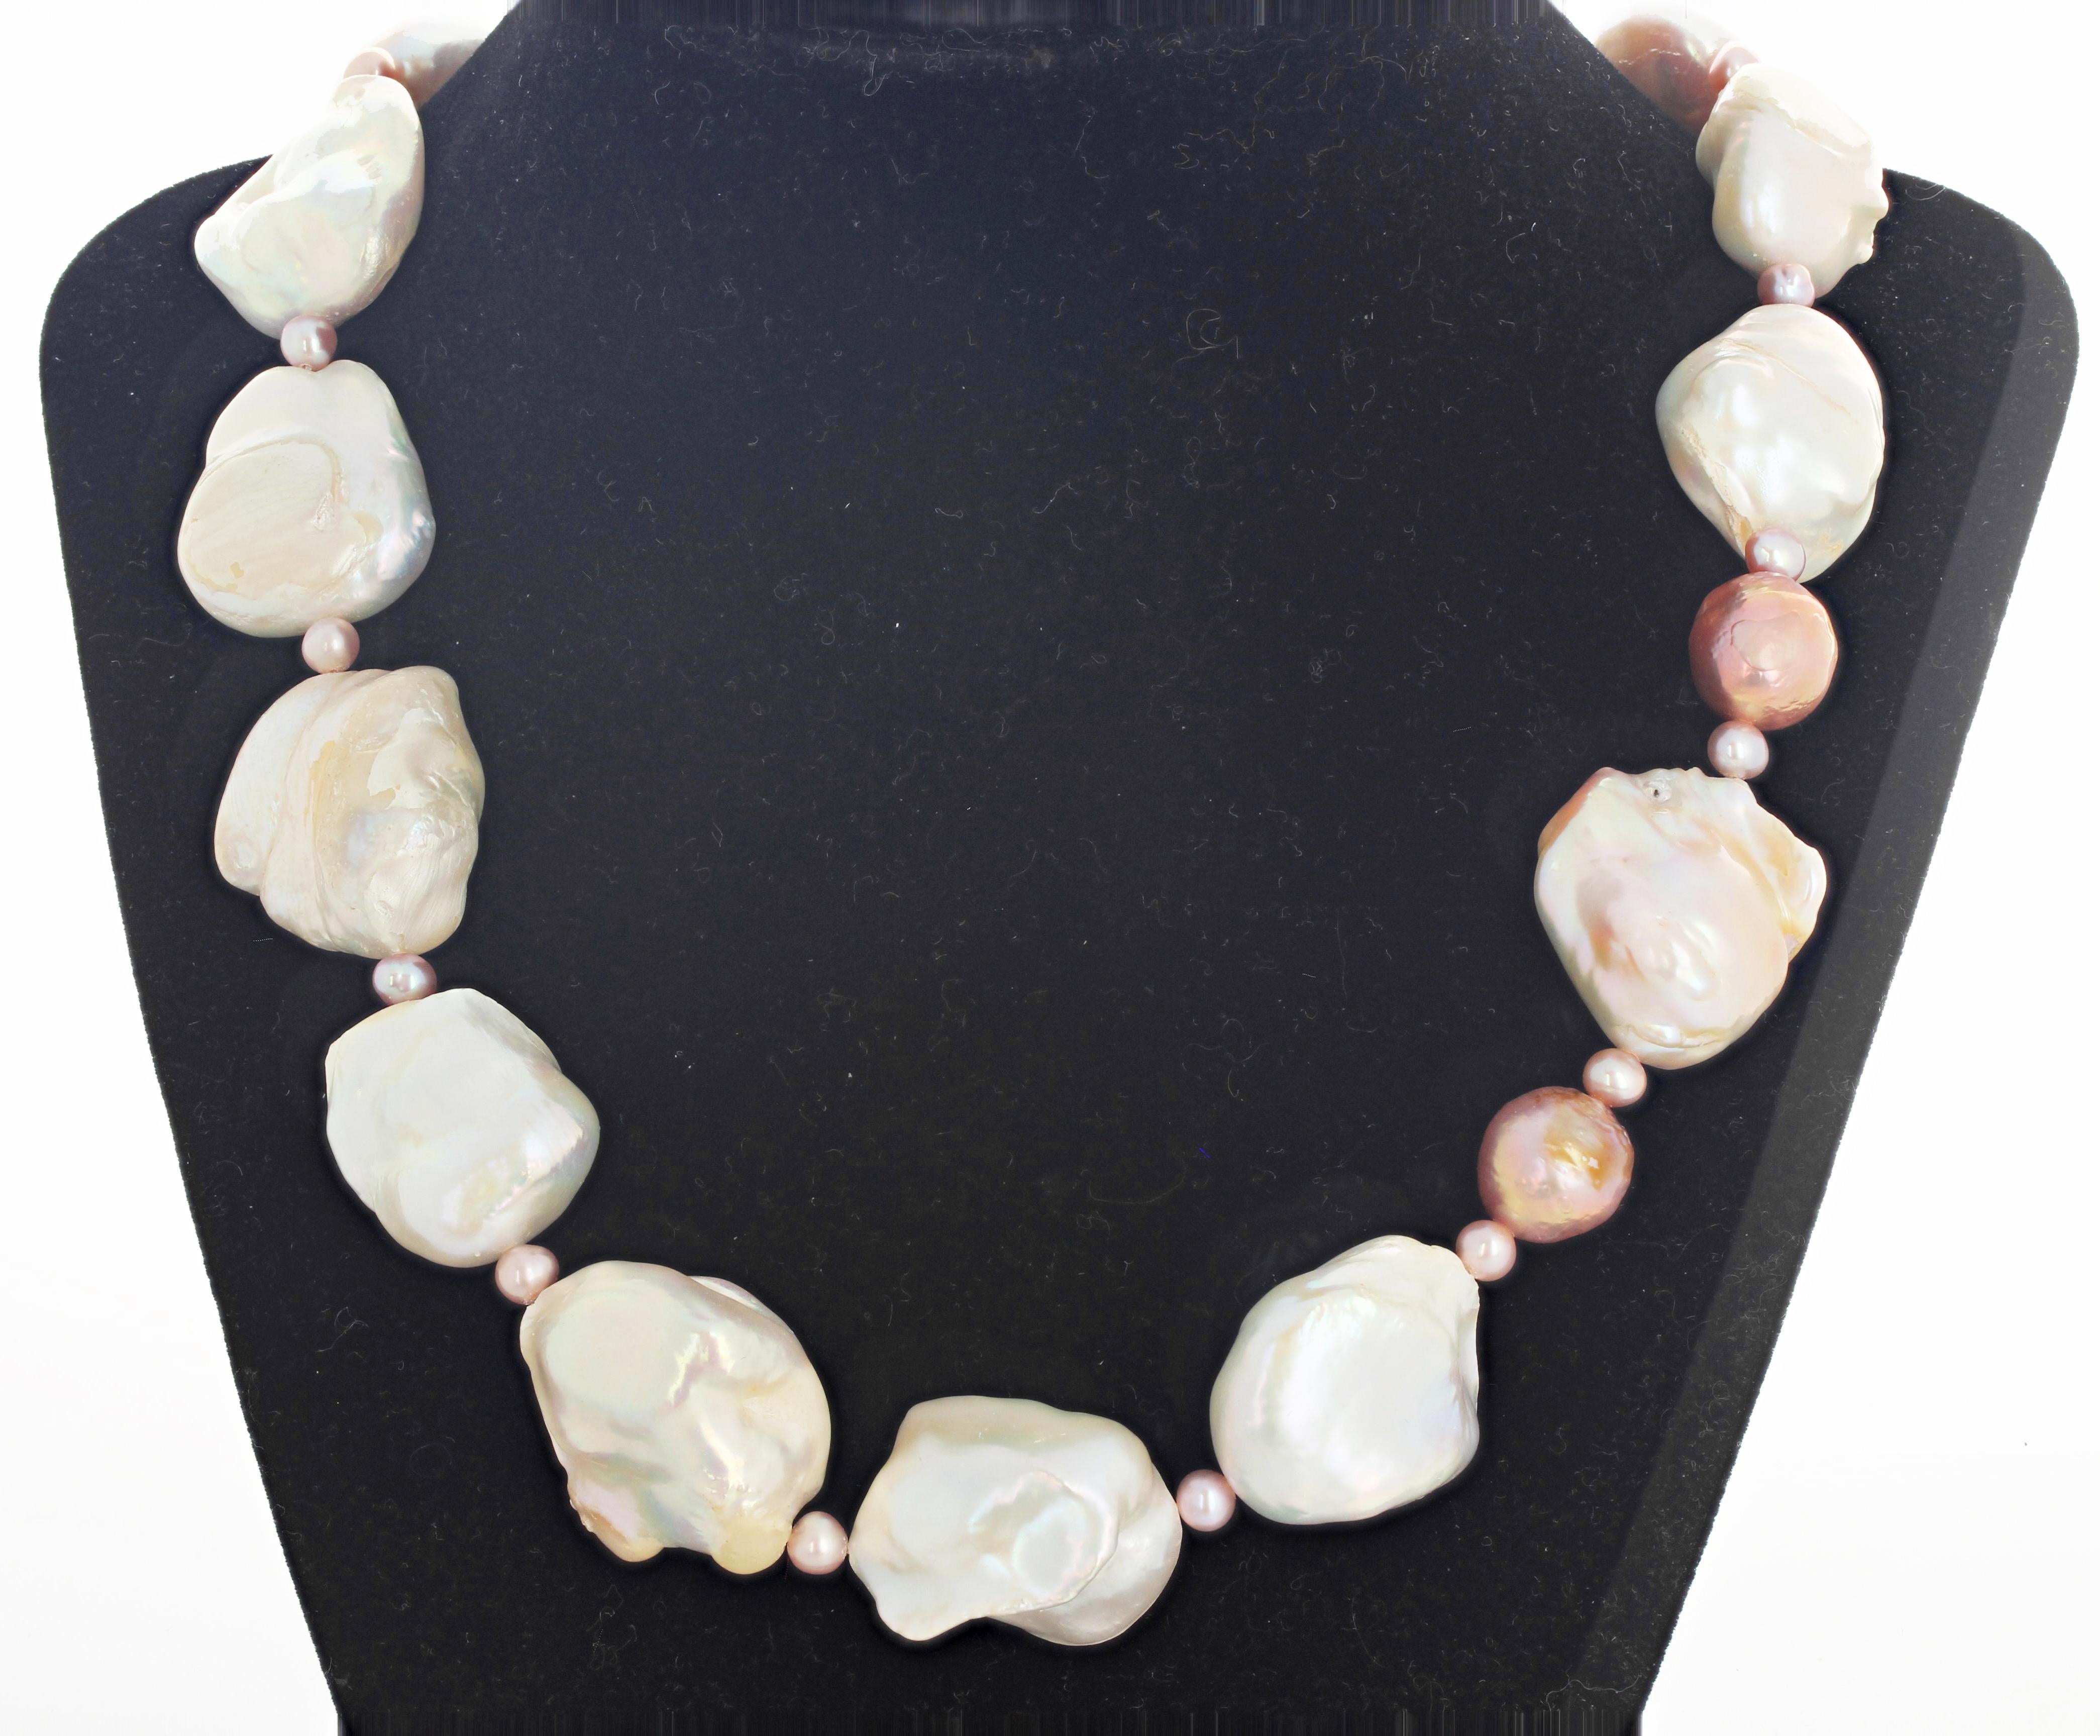 pinkish pearls